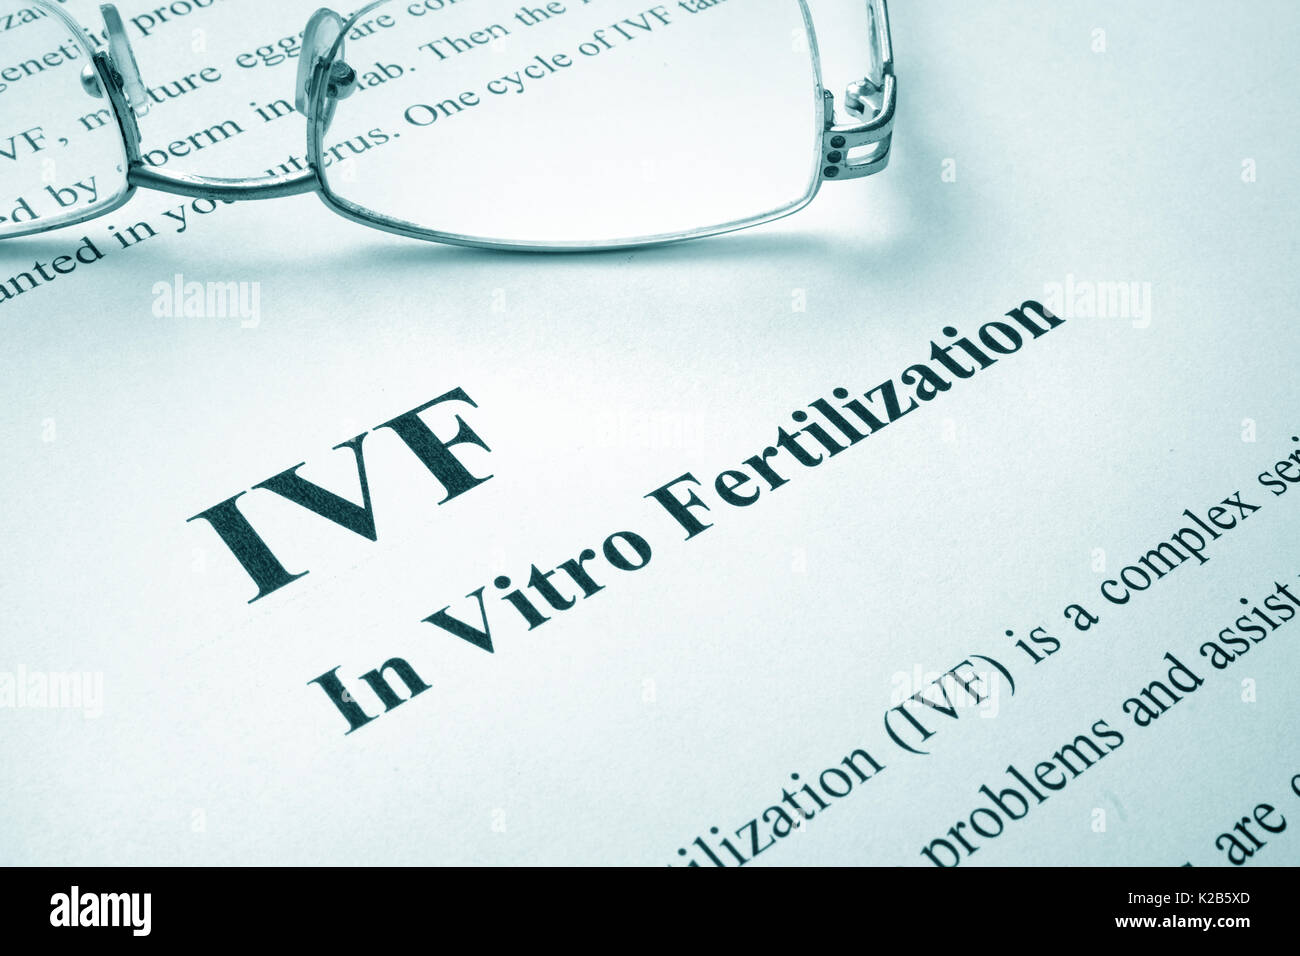 Documento con título de fertilización in vitro (FIV). Foto de stock